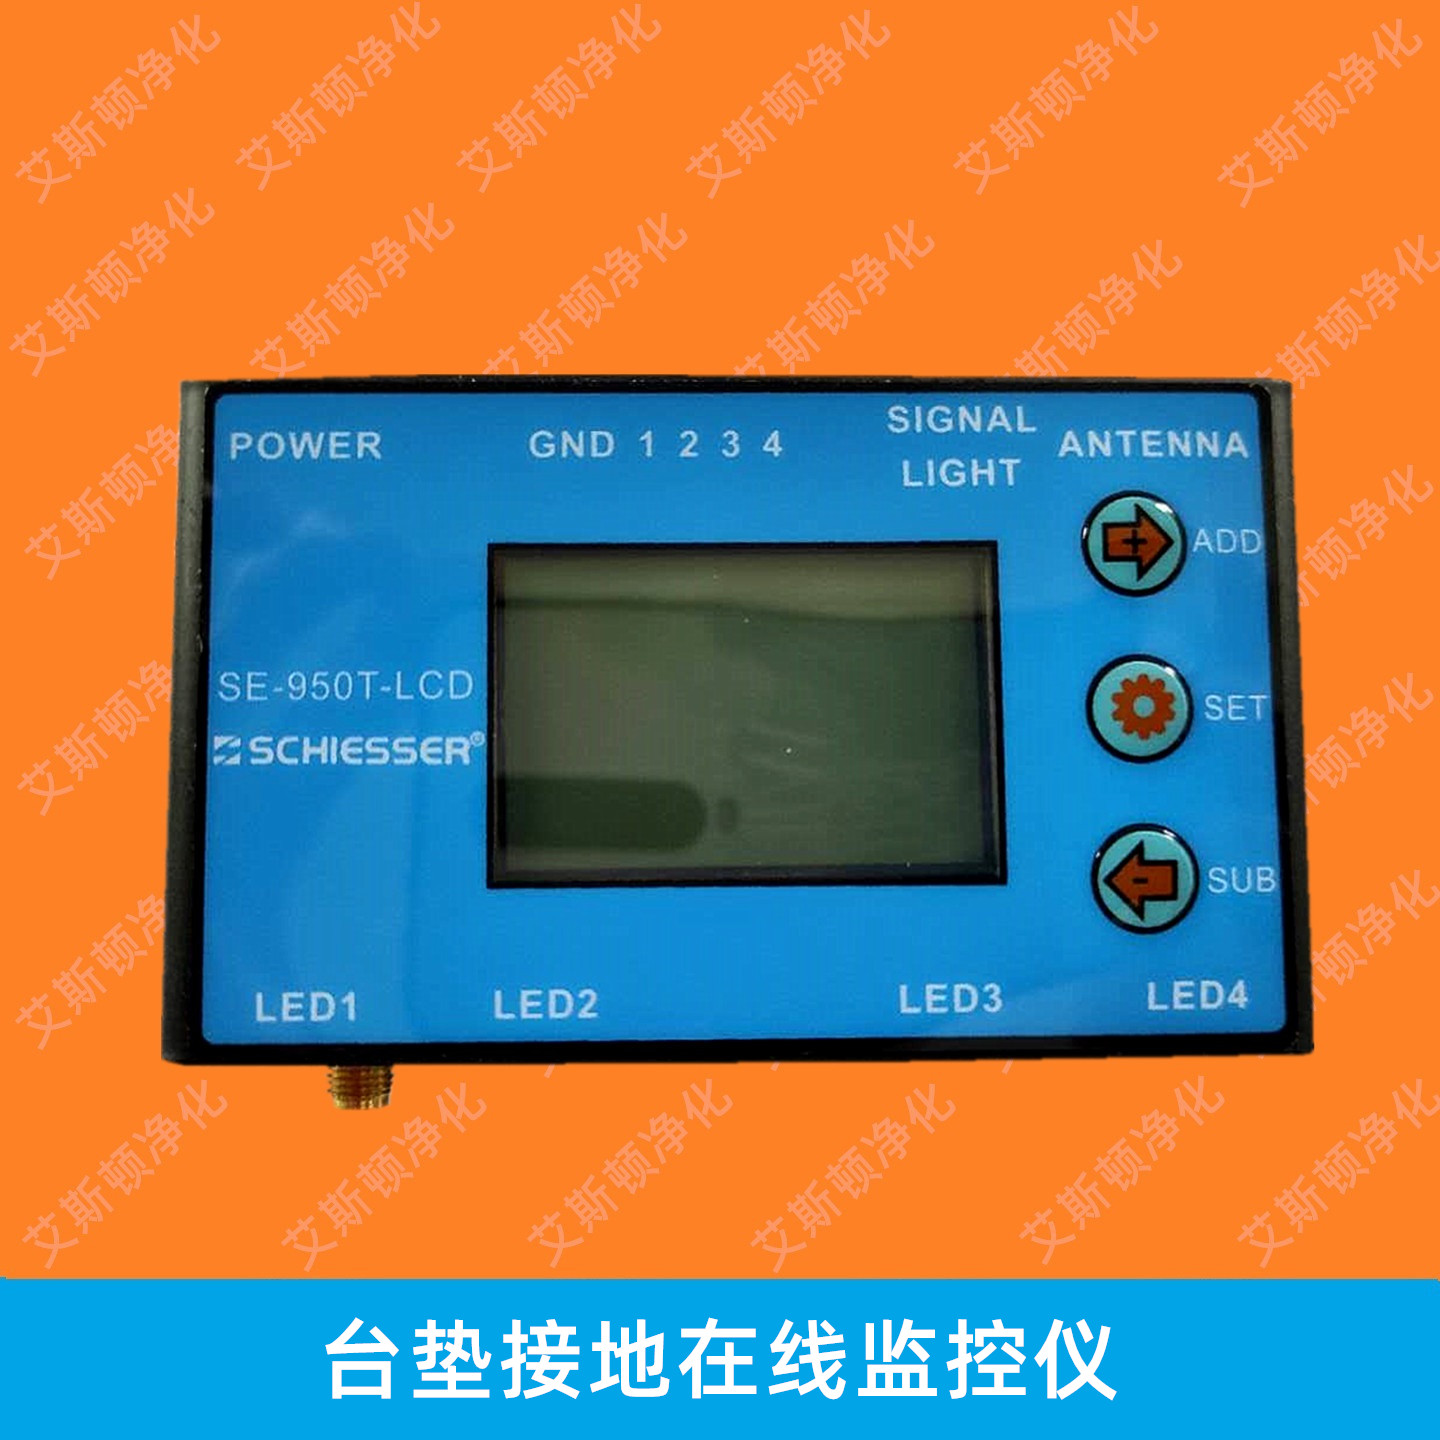 SE-950T-LCD-1台垫接地在线监控仪_副本.jpg